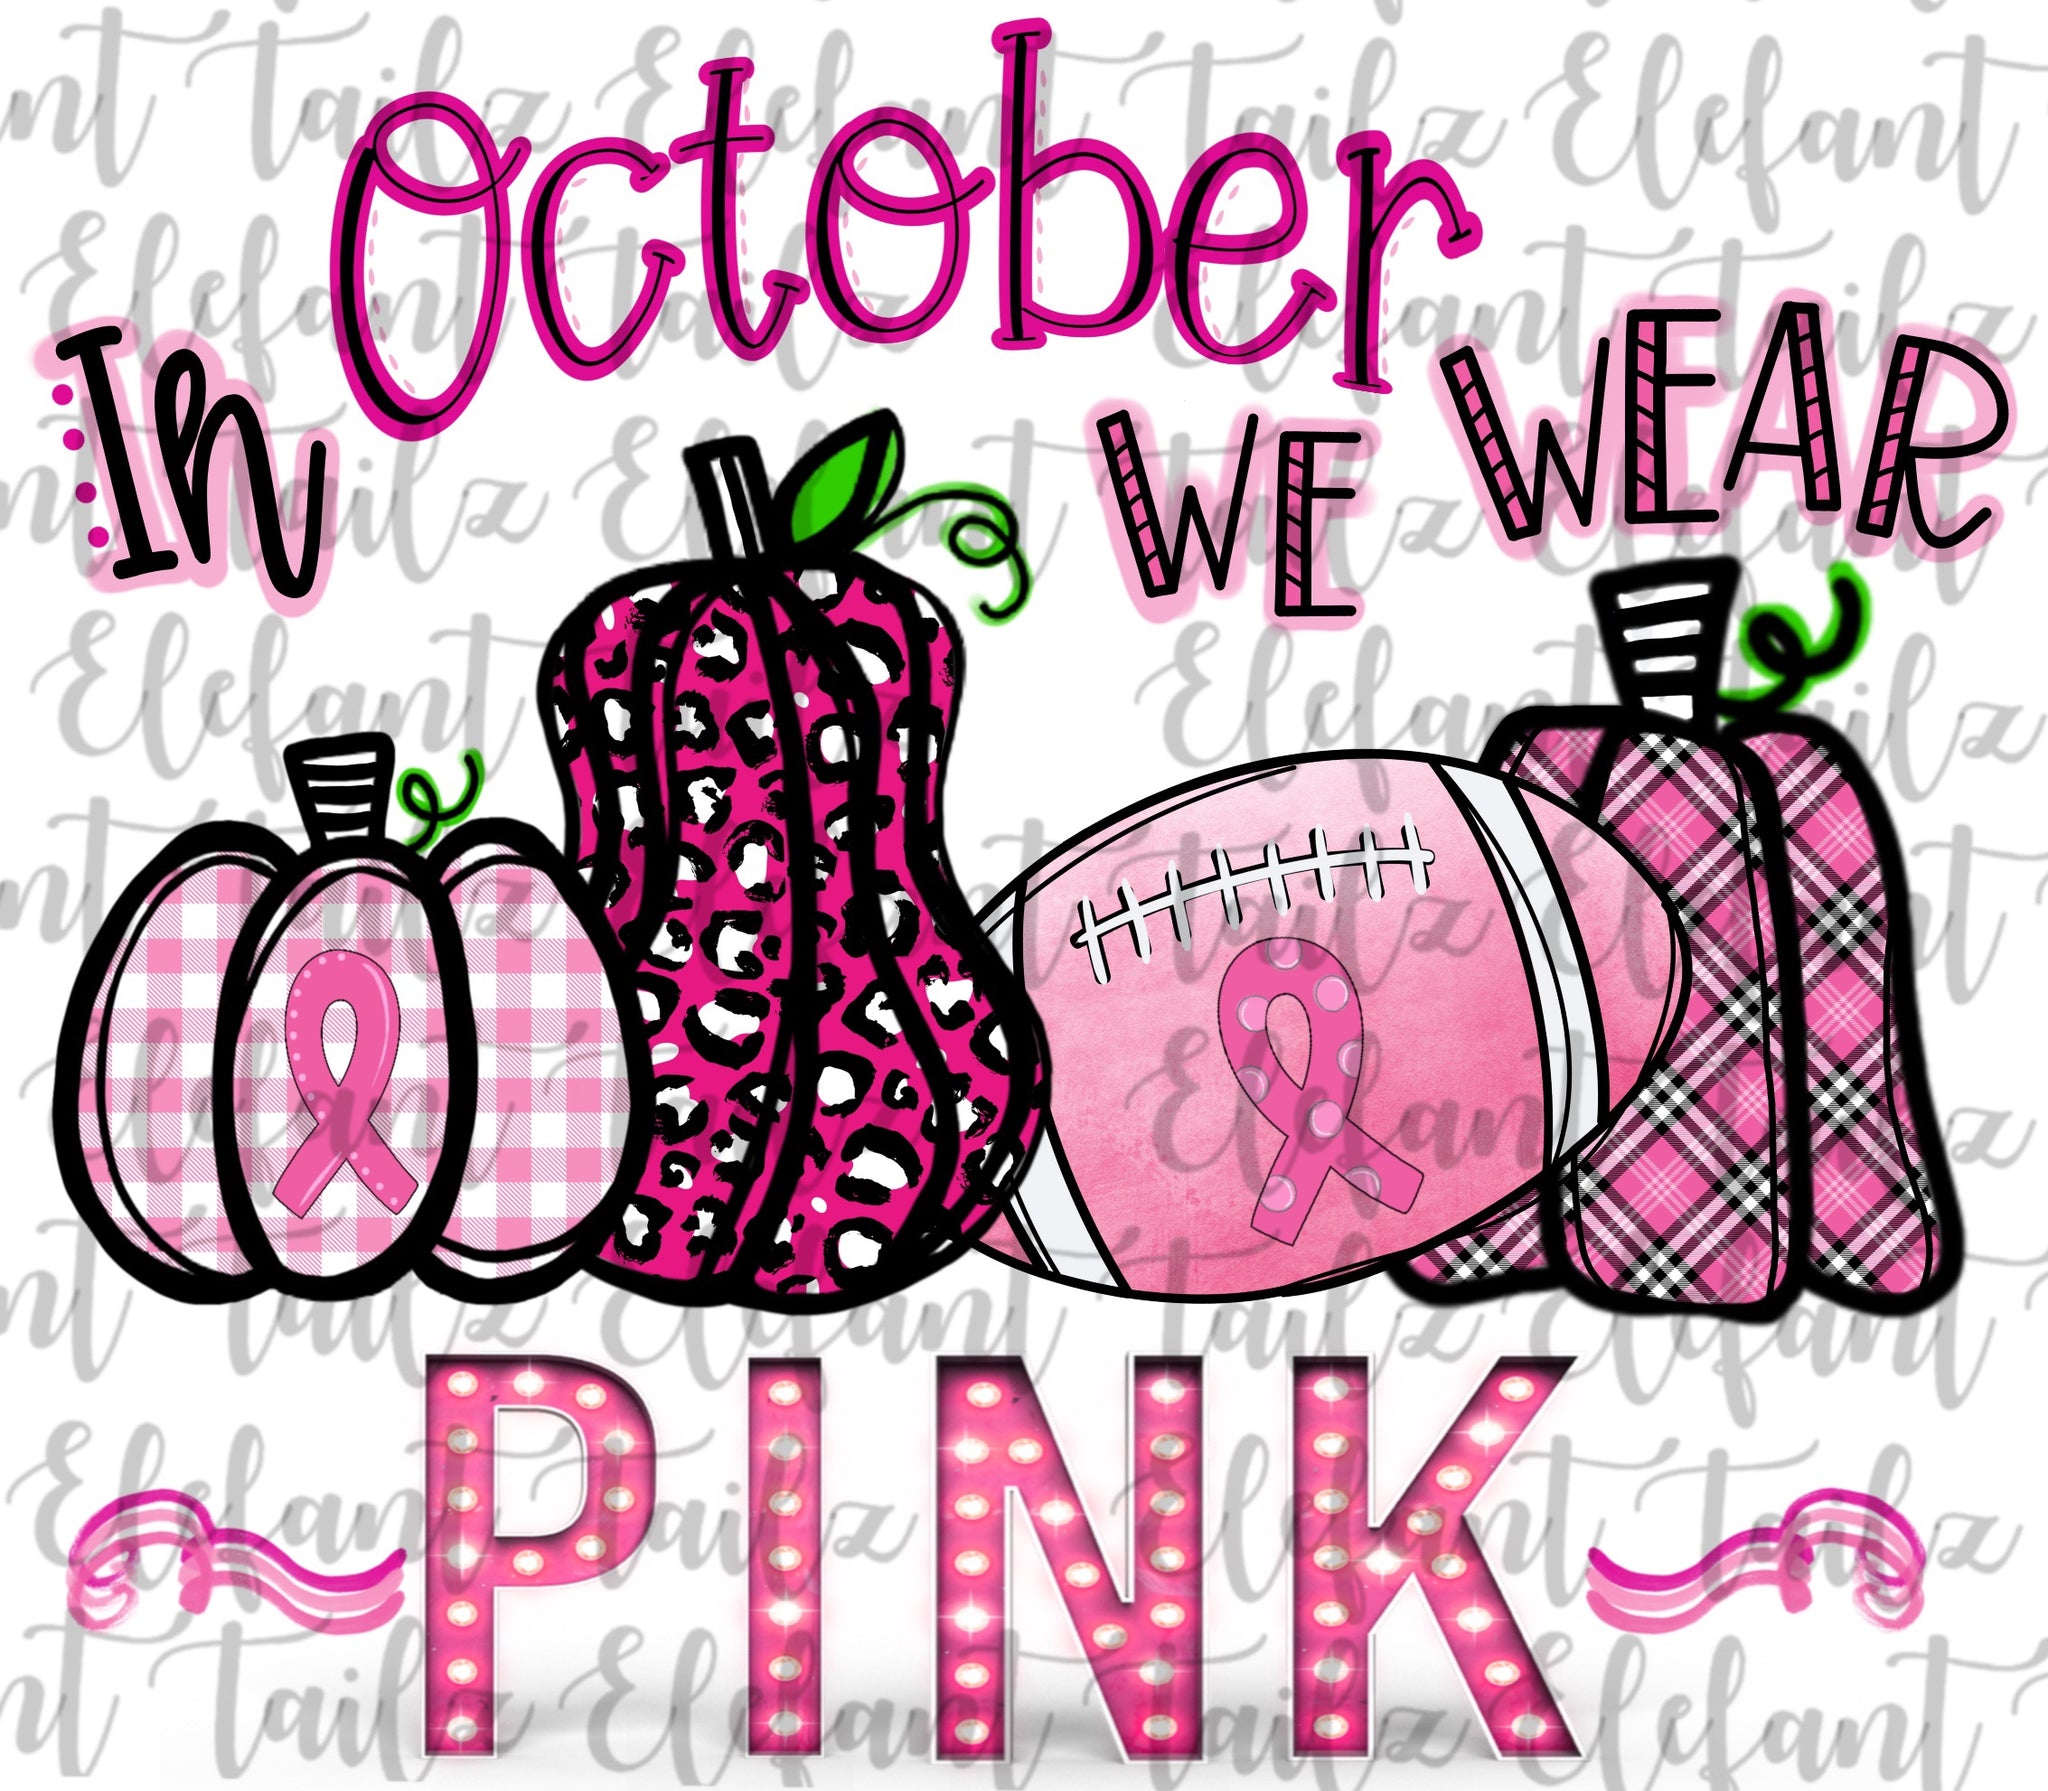 In October We Wear Pink Breast Cancer Awareness Pumpkins & Football